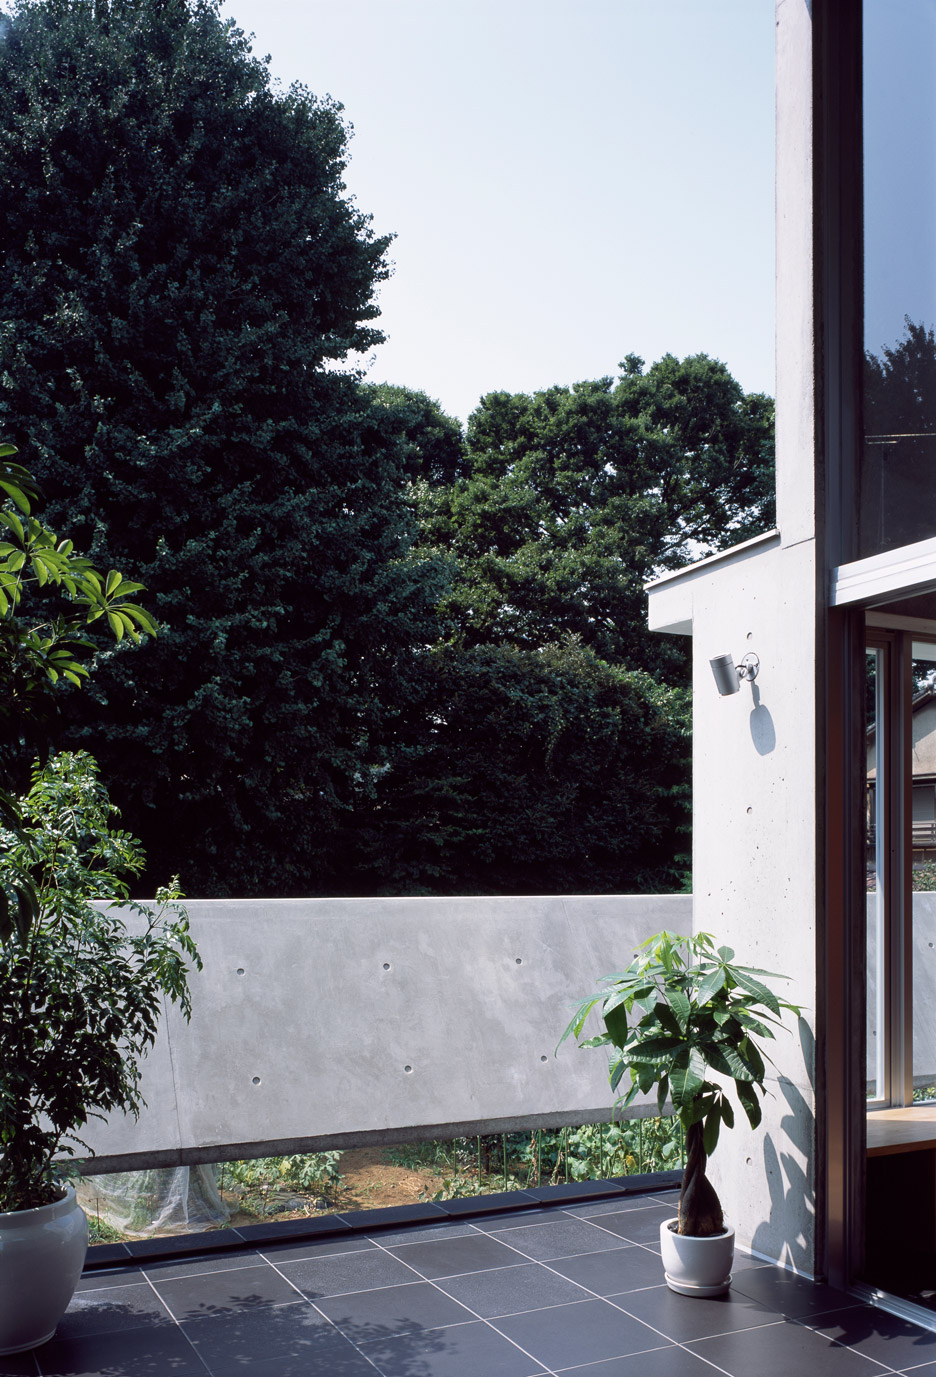 گالری عکس 9 خانه ای بتنی و کم‌عرض، مشرف به جنگل‌های اطراف توکیو  عکس پاسیو عکس حیاط عکس طراحی نما عکس معماری توکیو عکس معماری ژاپن عکس معماری مسکونی عکس نور در معماری